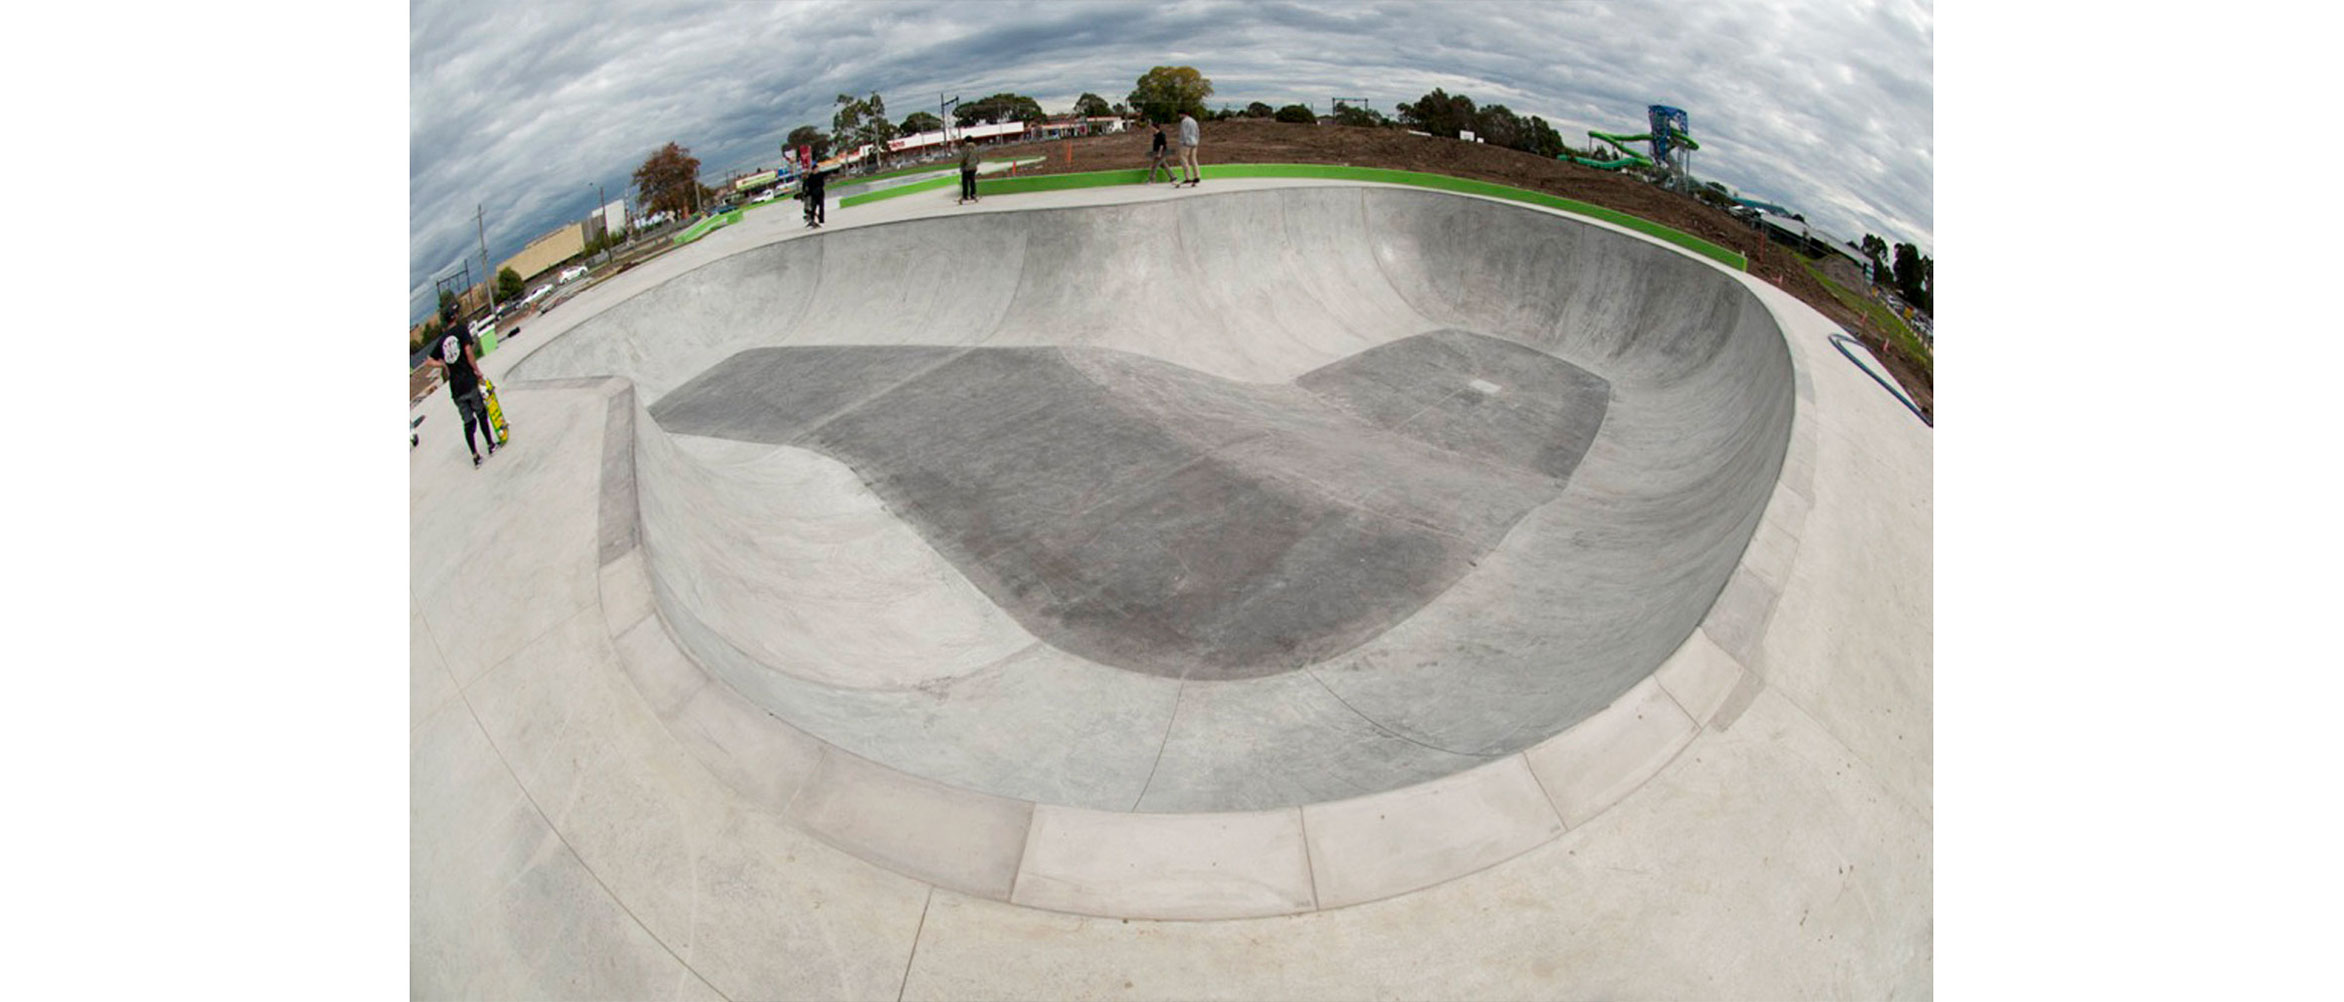 Noble Park skate park big bowl